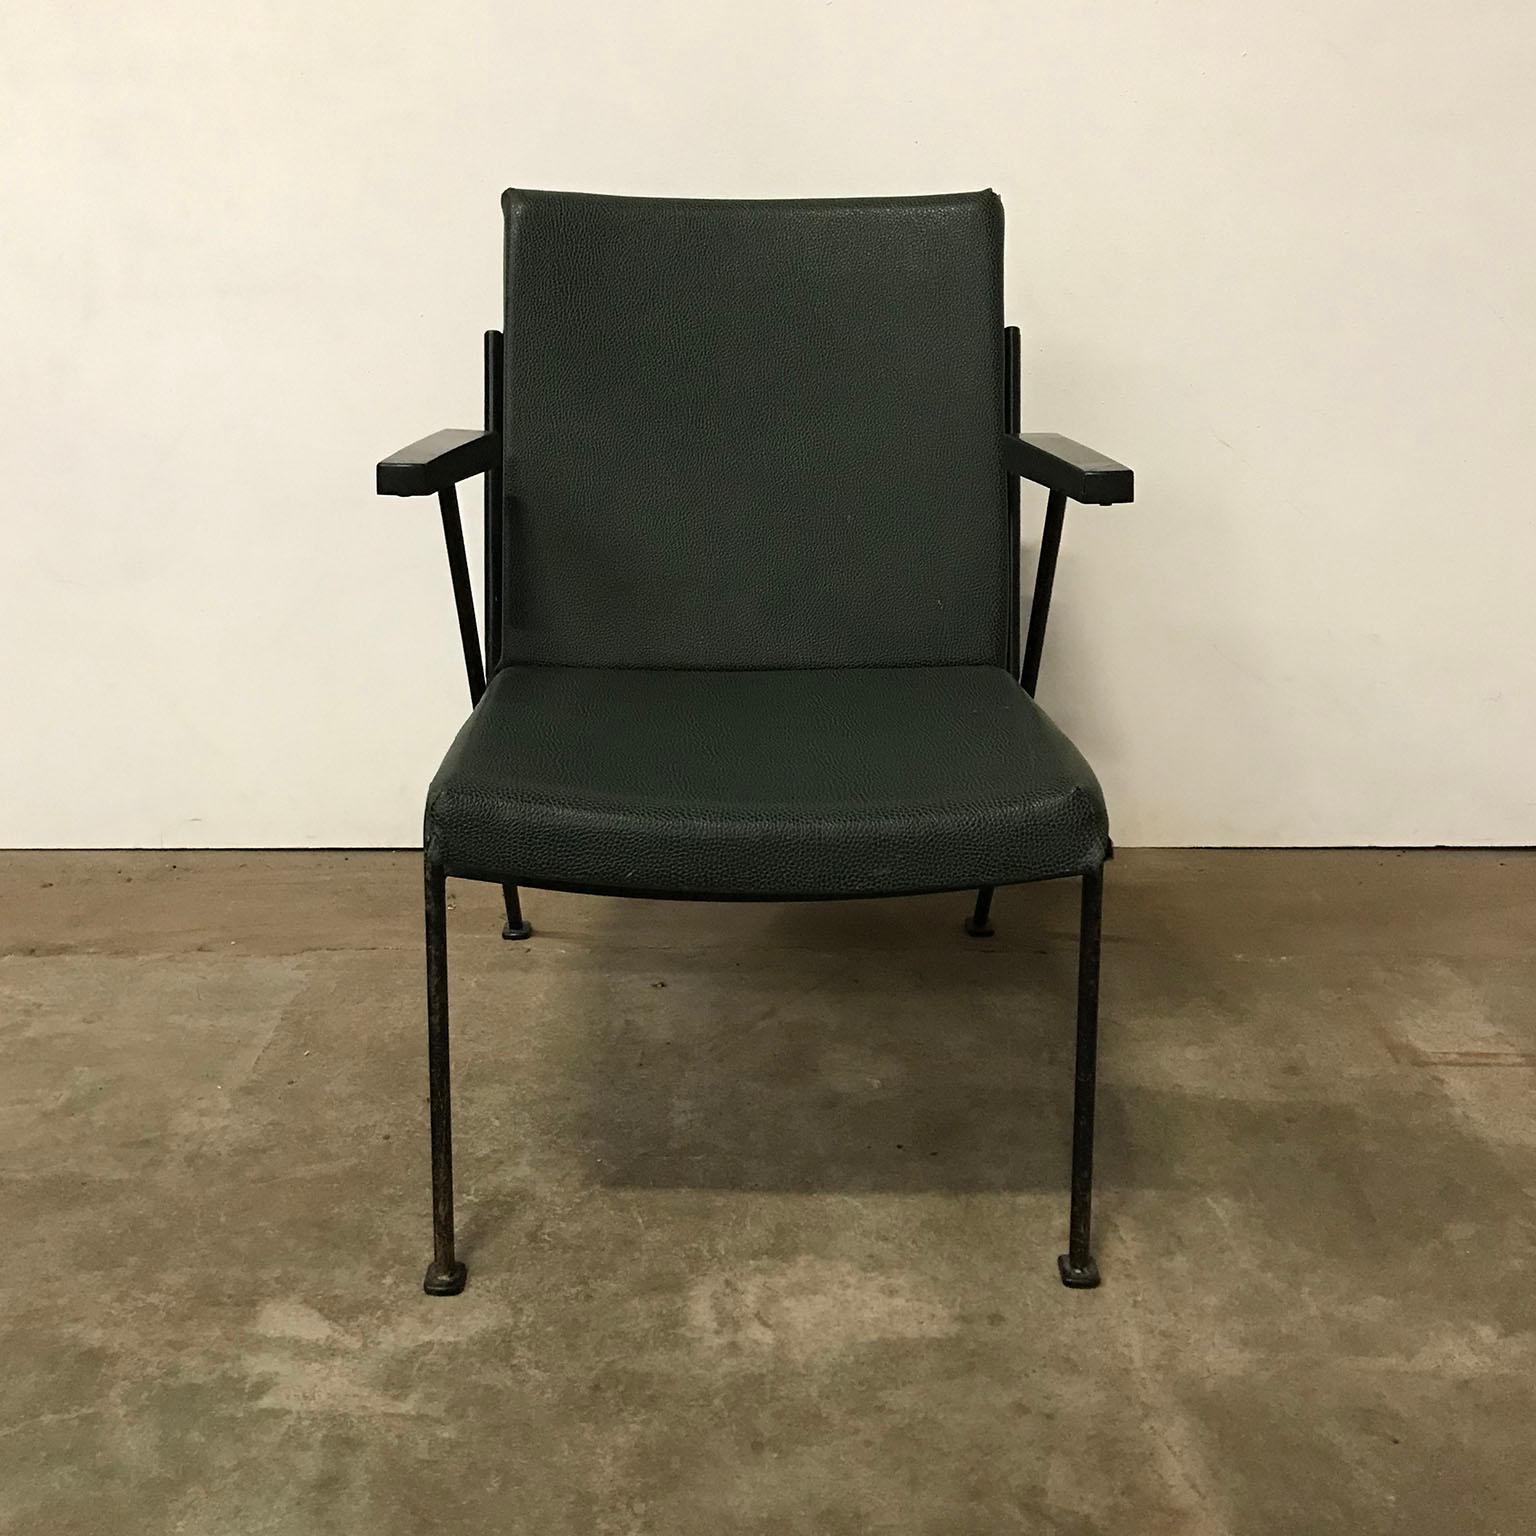 1959, Wim Rietveld for Ahrend de Cirkel, Oase Chair Original Green Leatherette  For Sale 2